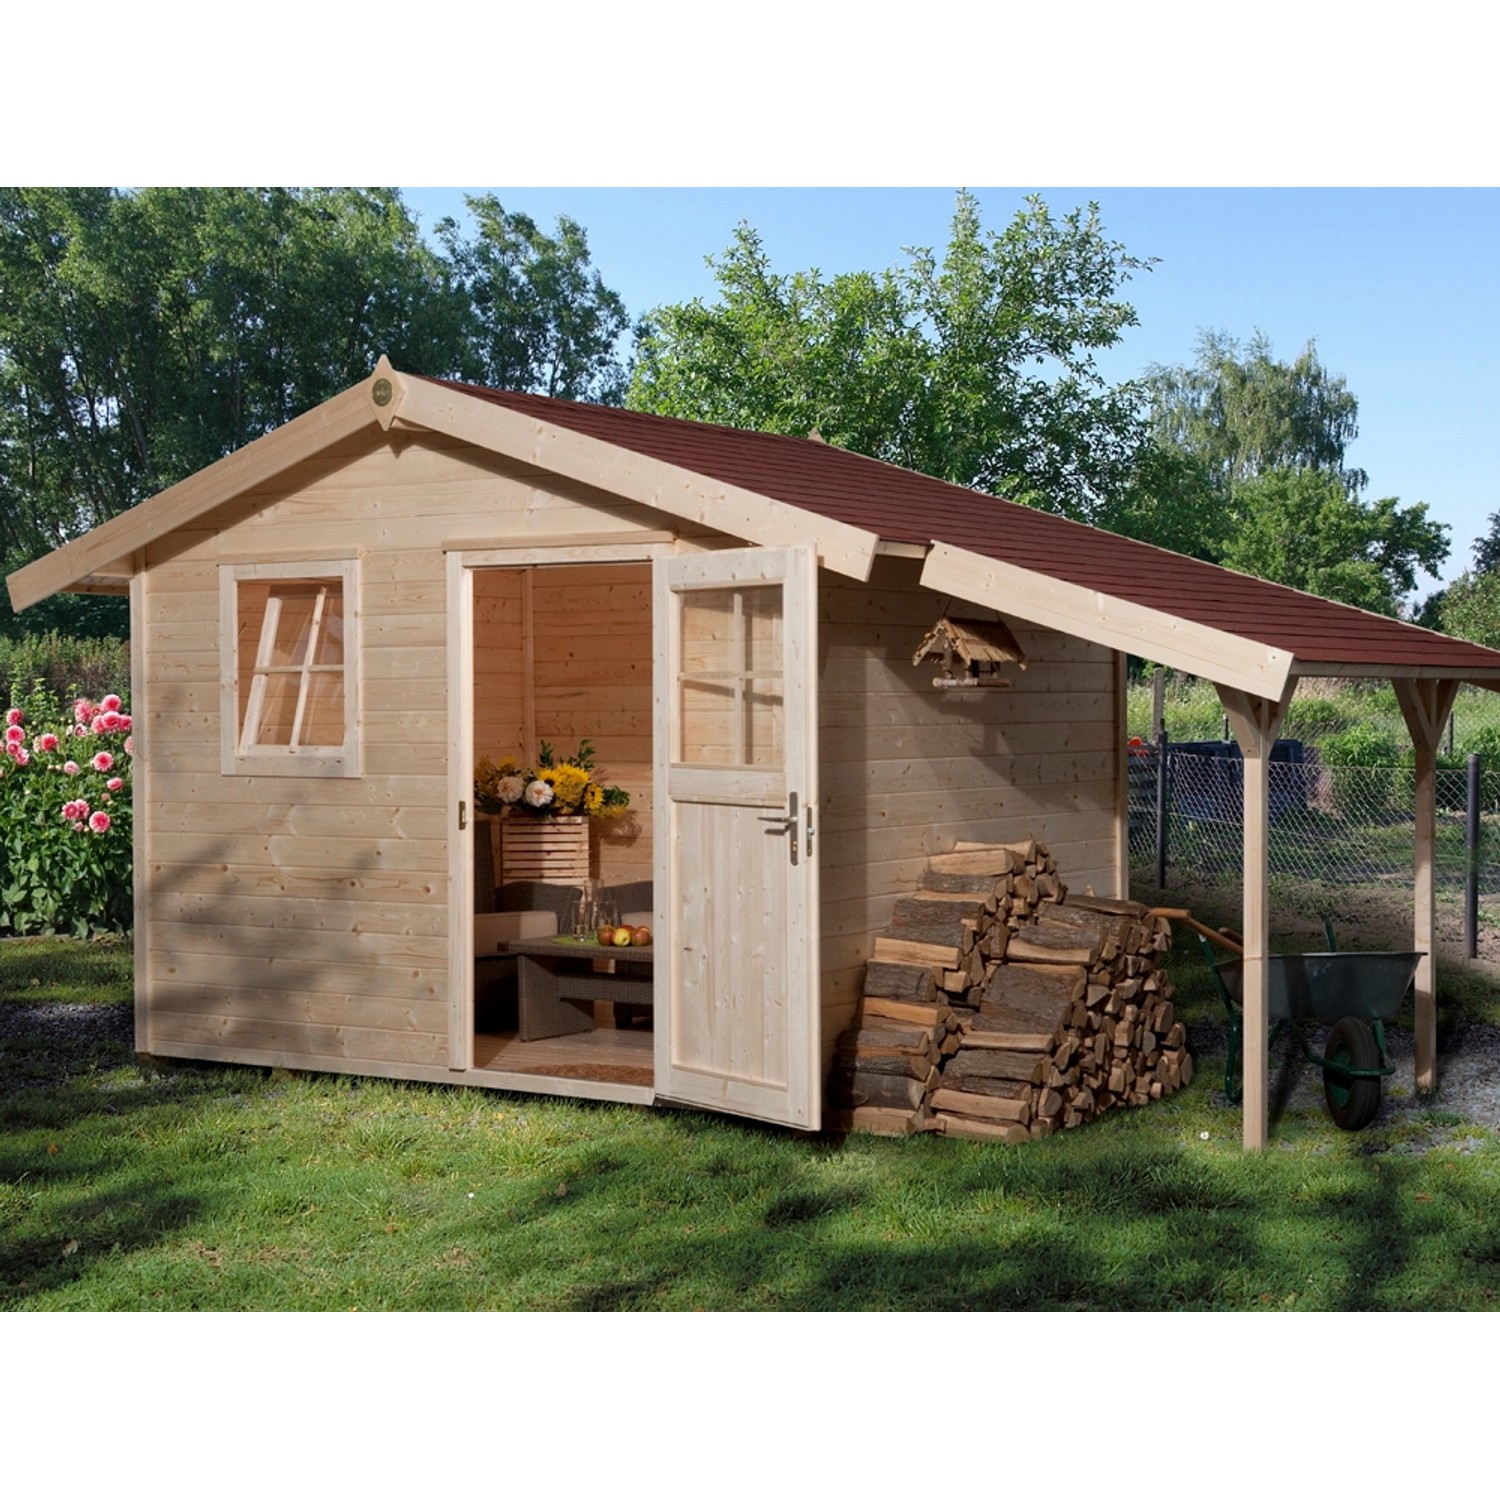 OBI Outdoor Living Holz-Gartenhaus/Gerätehaus Bozen Satteldach Unbehandelt 235 cm von OBI Outdoor Living